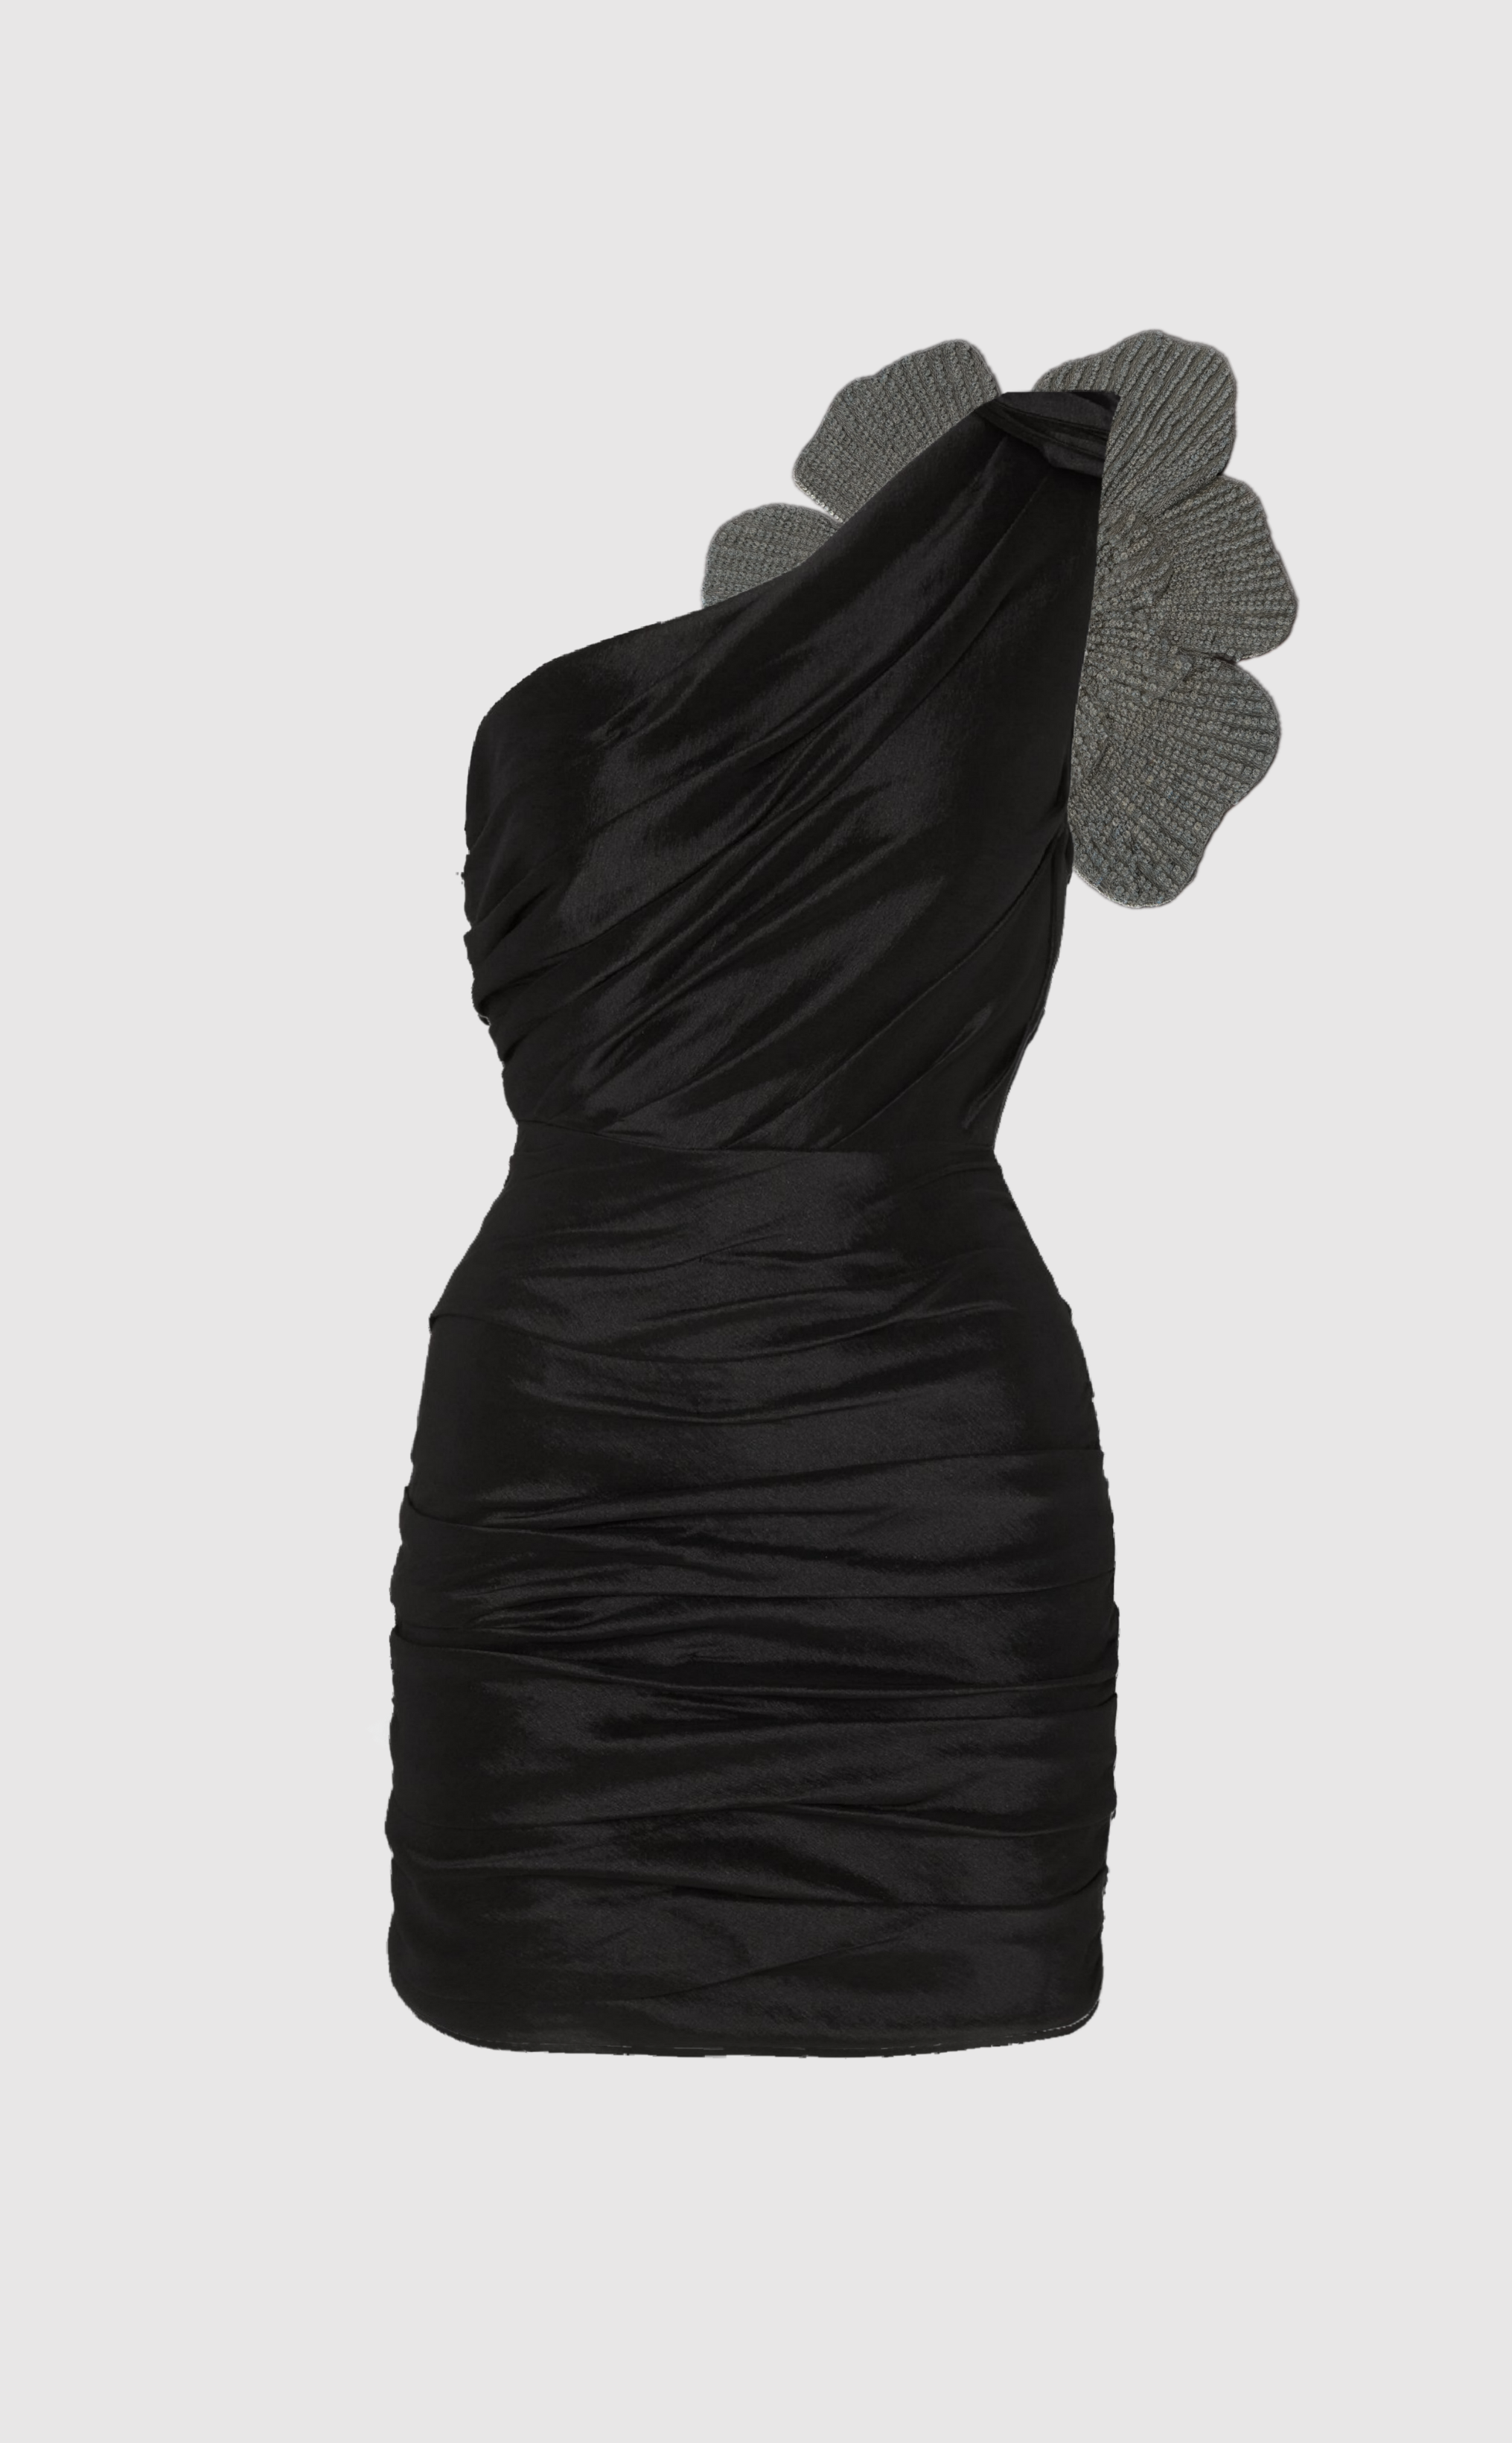 Amouage dress in black